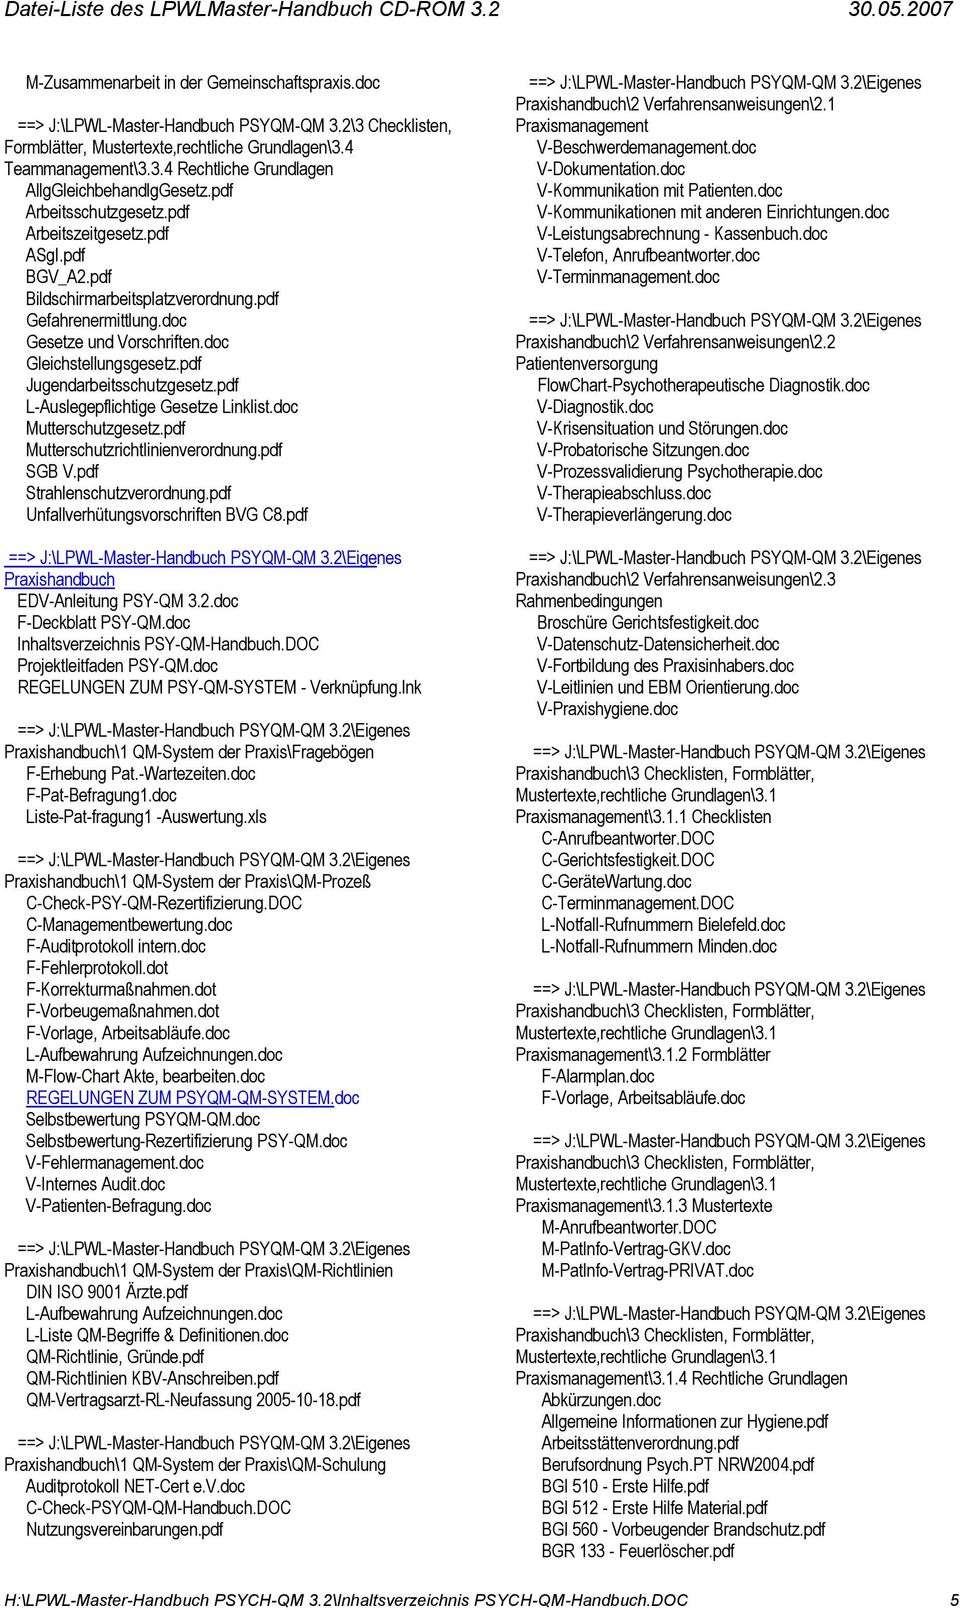 pdf UnfallverhÑtungsvorschriften BVG C8.pdf Praxishandbuch EDV-Anleitung PSY-QM 3.2.doc F-Deckblatt PSY-QM.doc Inhaltsverzeichnis PSY-QM-Handbuch.DOC Projektleitfaden PSY-QM.